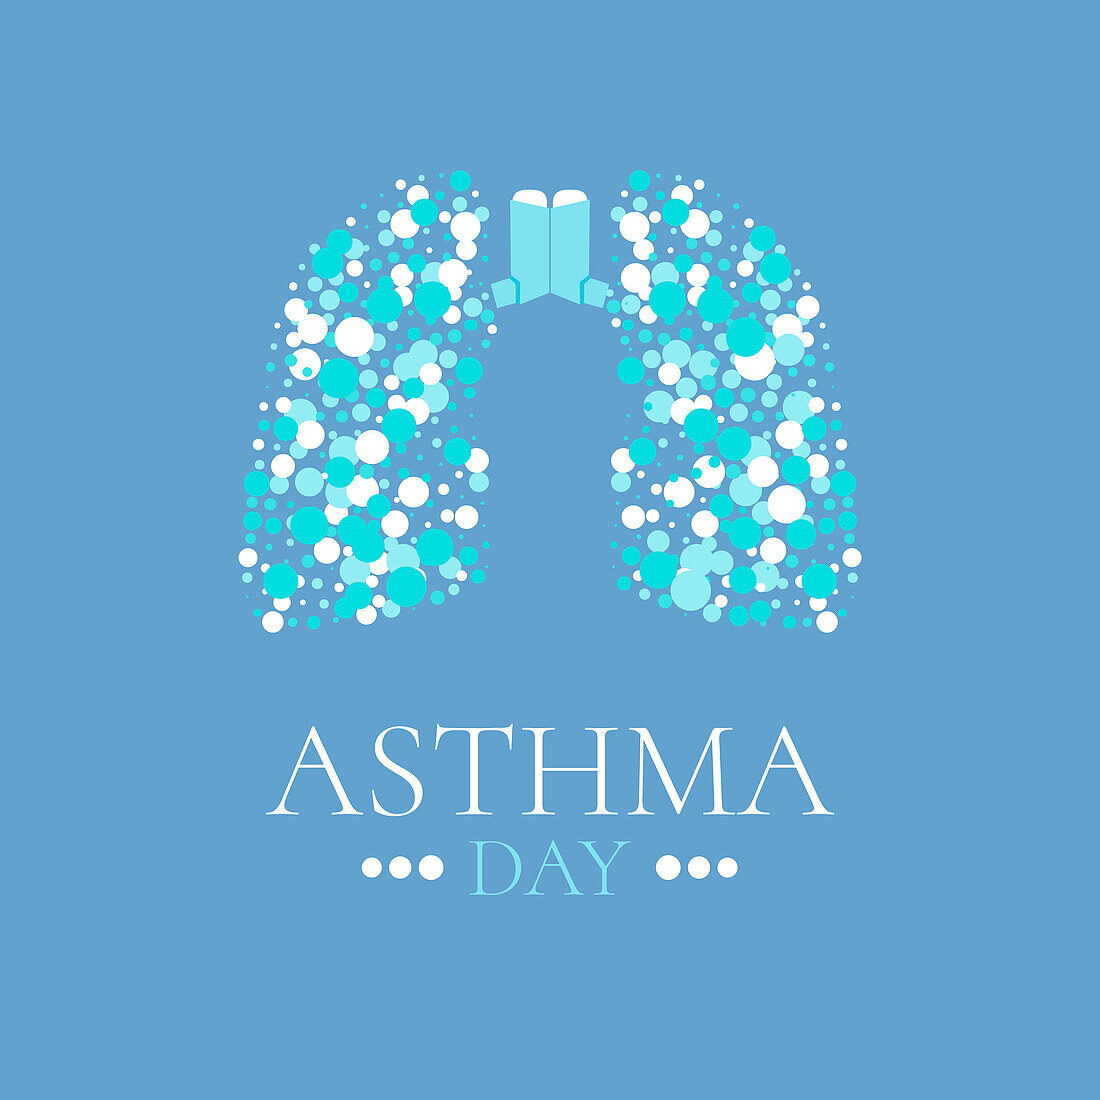 Asthma awareness, conceptual illustration